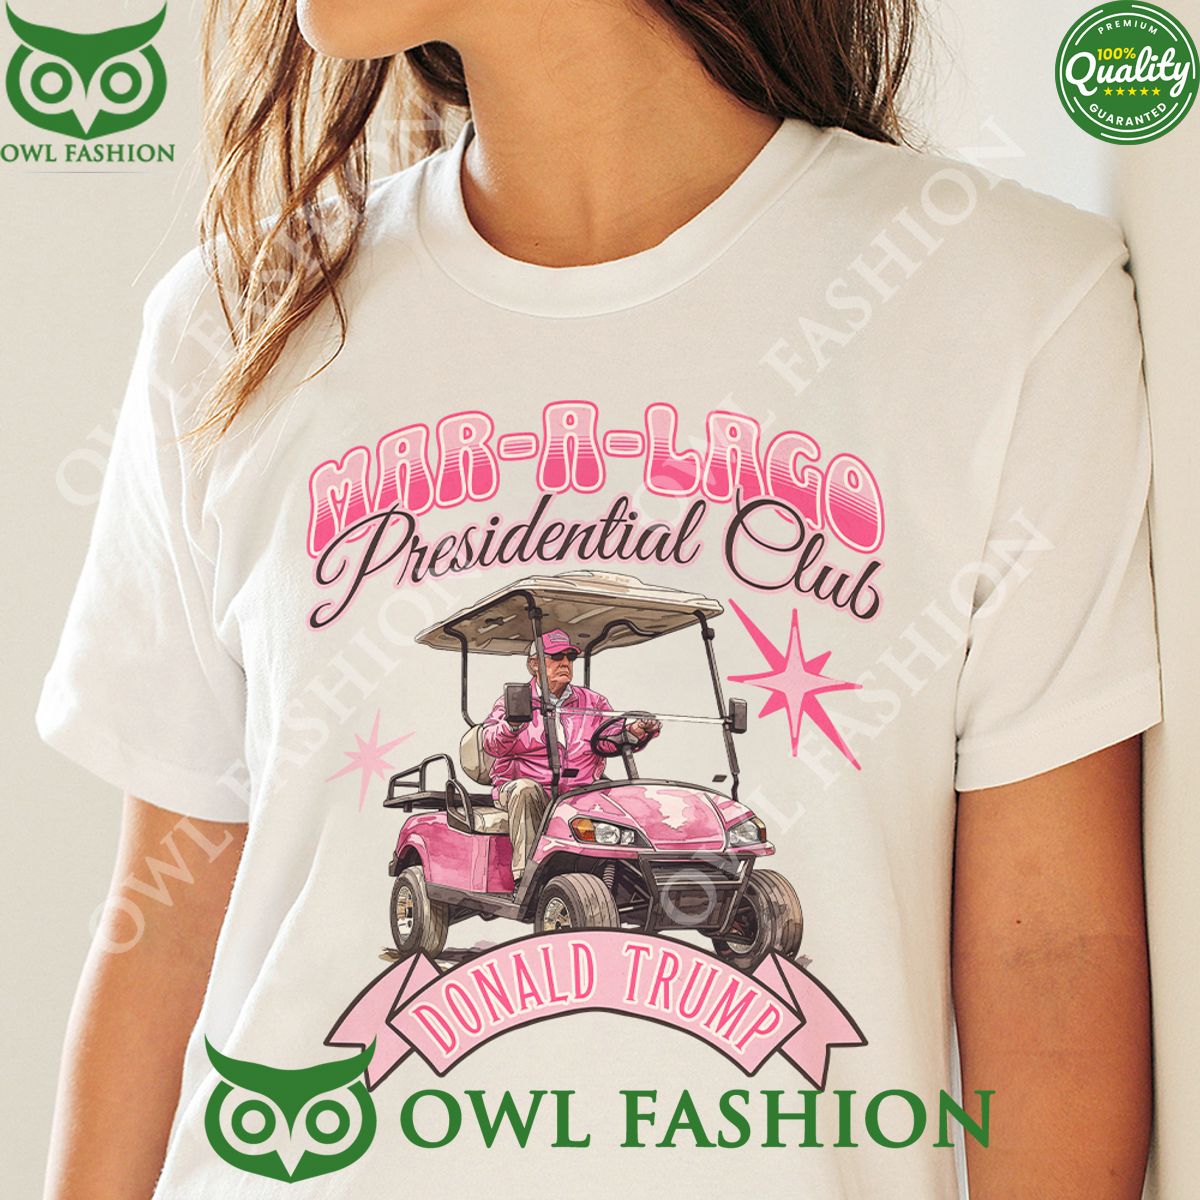 mar a lago golf presidential club trump bright pink t shirt 1 dgT3n.jpg